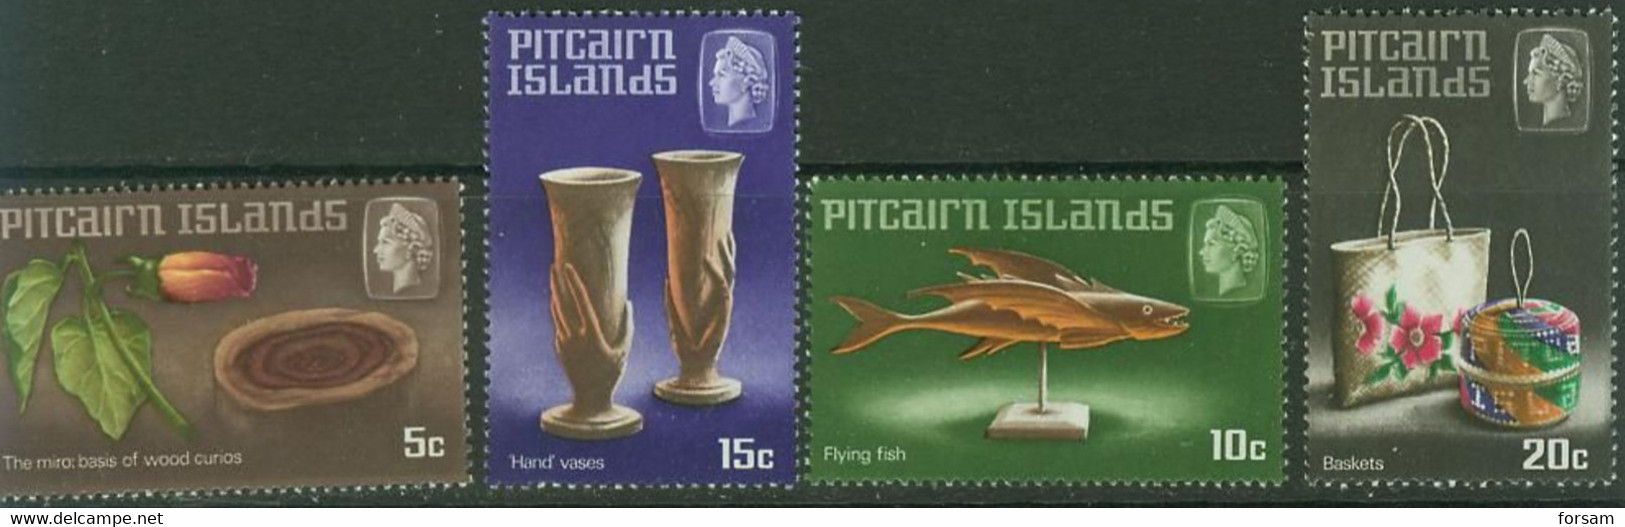 PITCAIRN ISLANDS..1968..Michel # 91-94...MNH...MiCV - 5 Euro. - Pitcairninsel